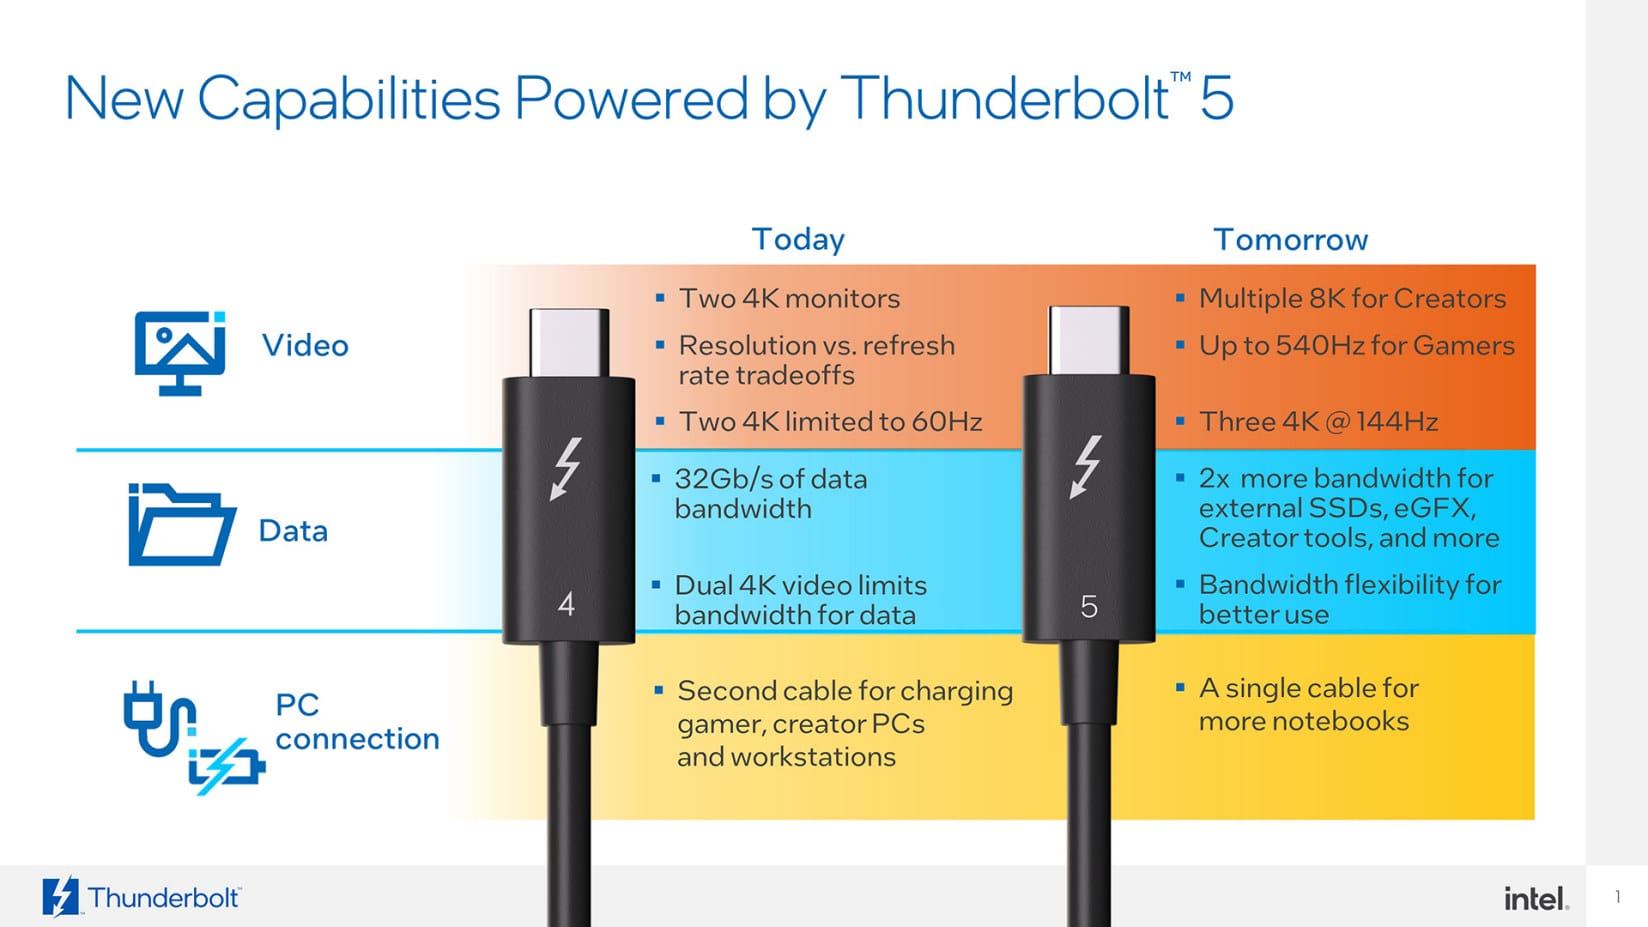 Thunderbolt 5 capabilities